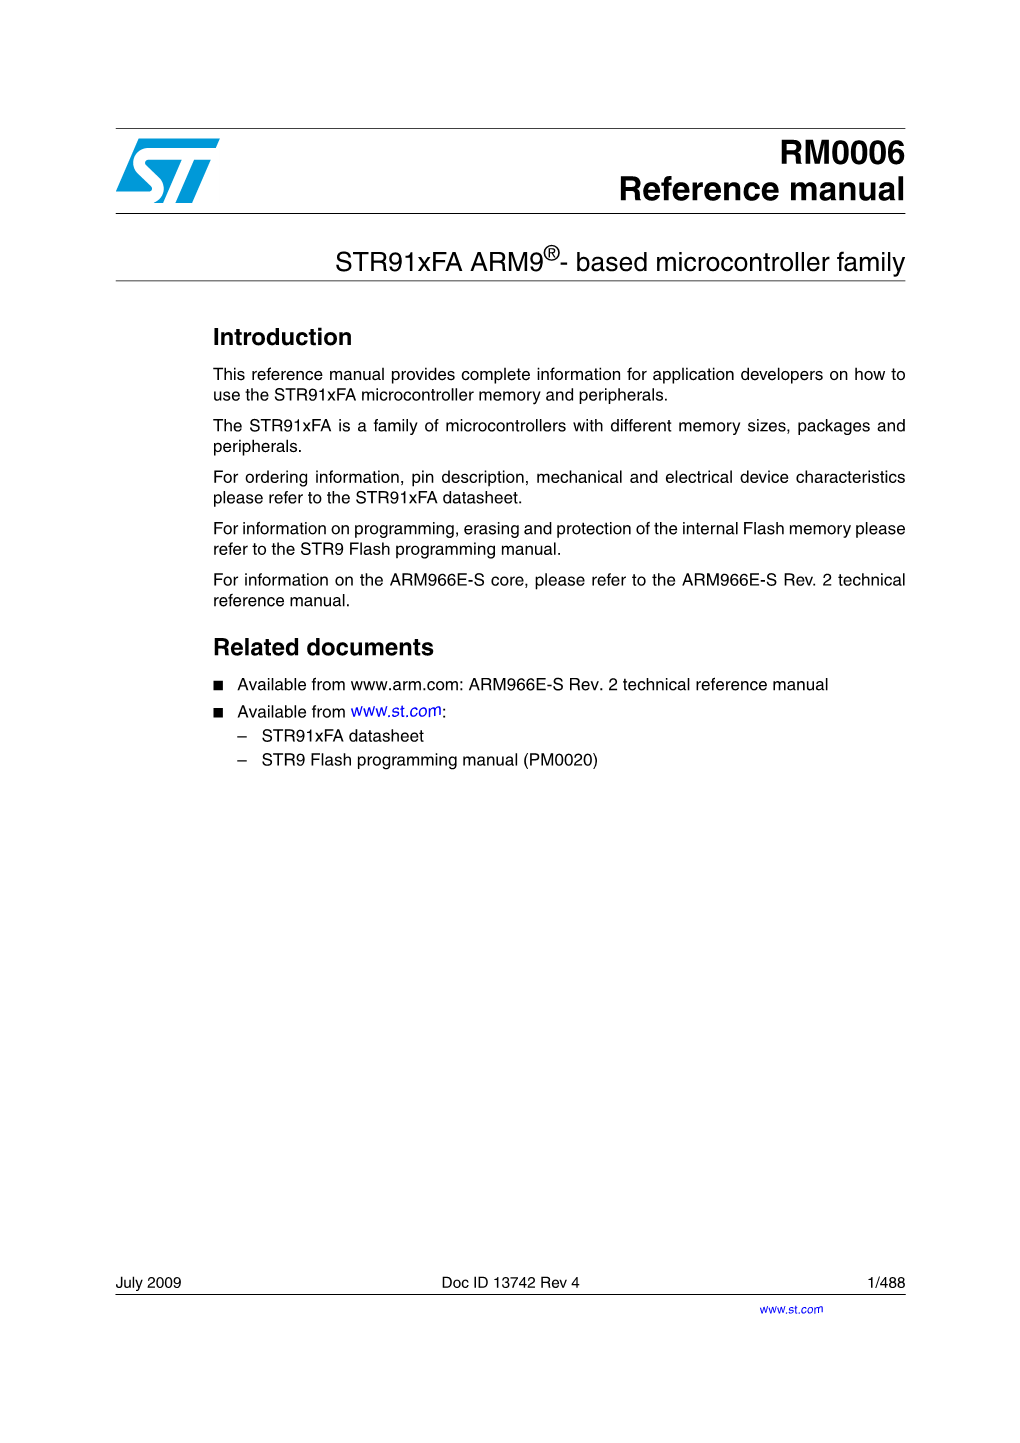 Str91xfa ARM9®- Based Microcontroller Family